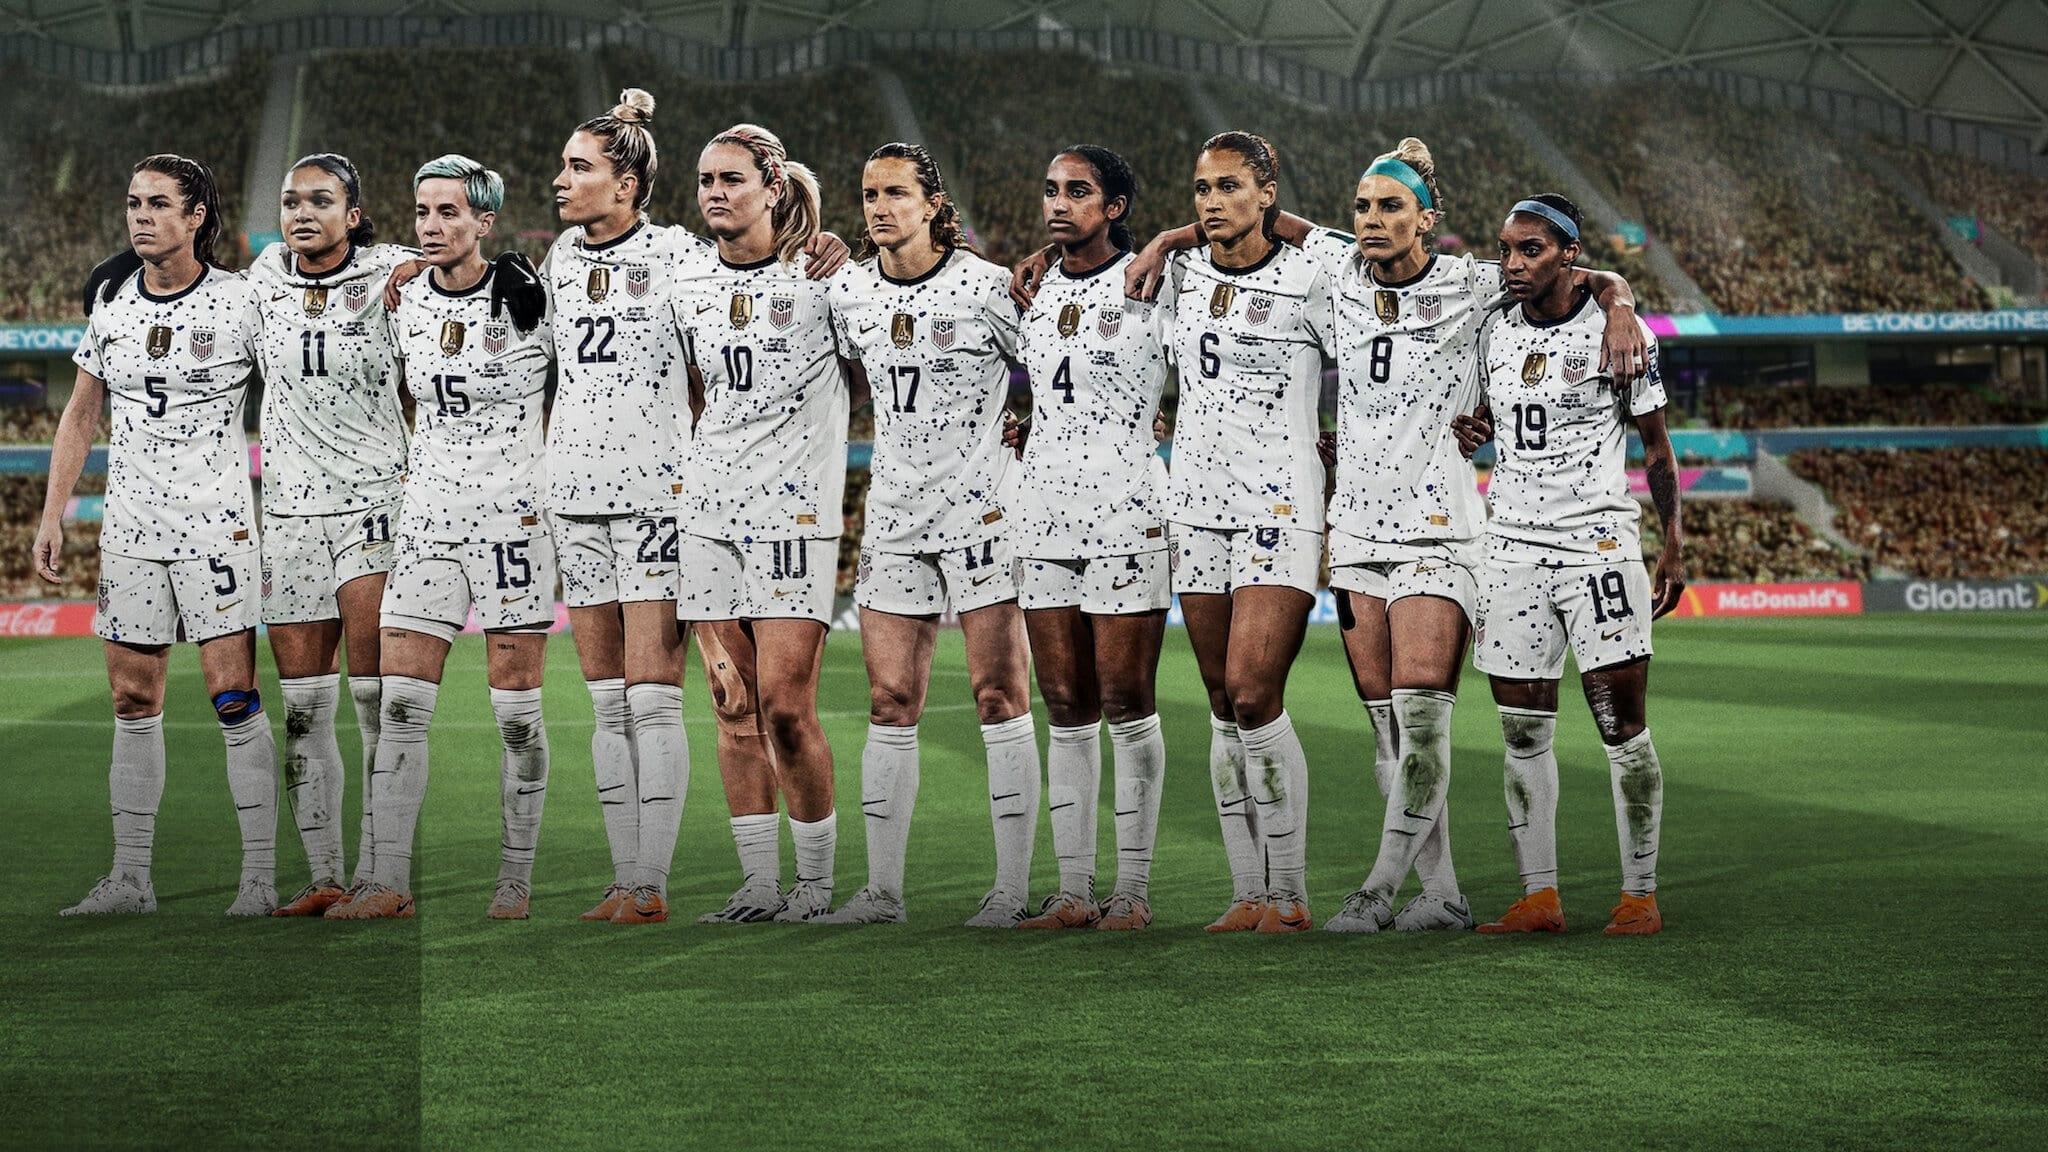 Under Pressure: The U.S. Women's World Cup Team backdrop